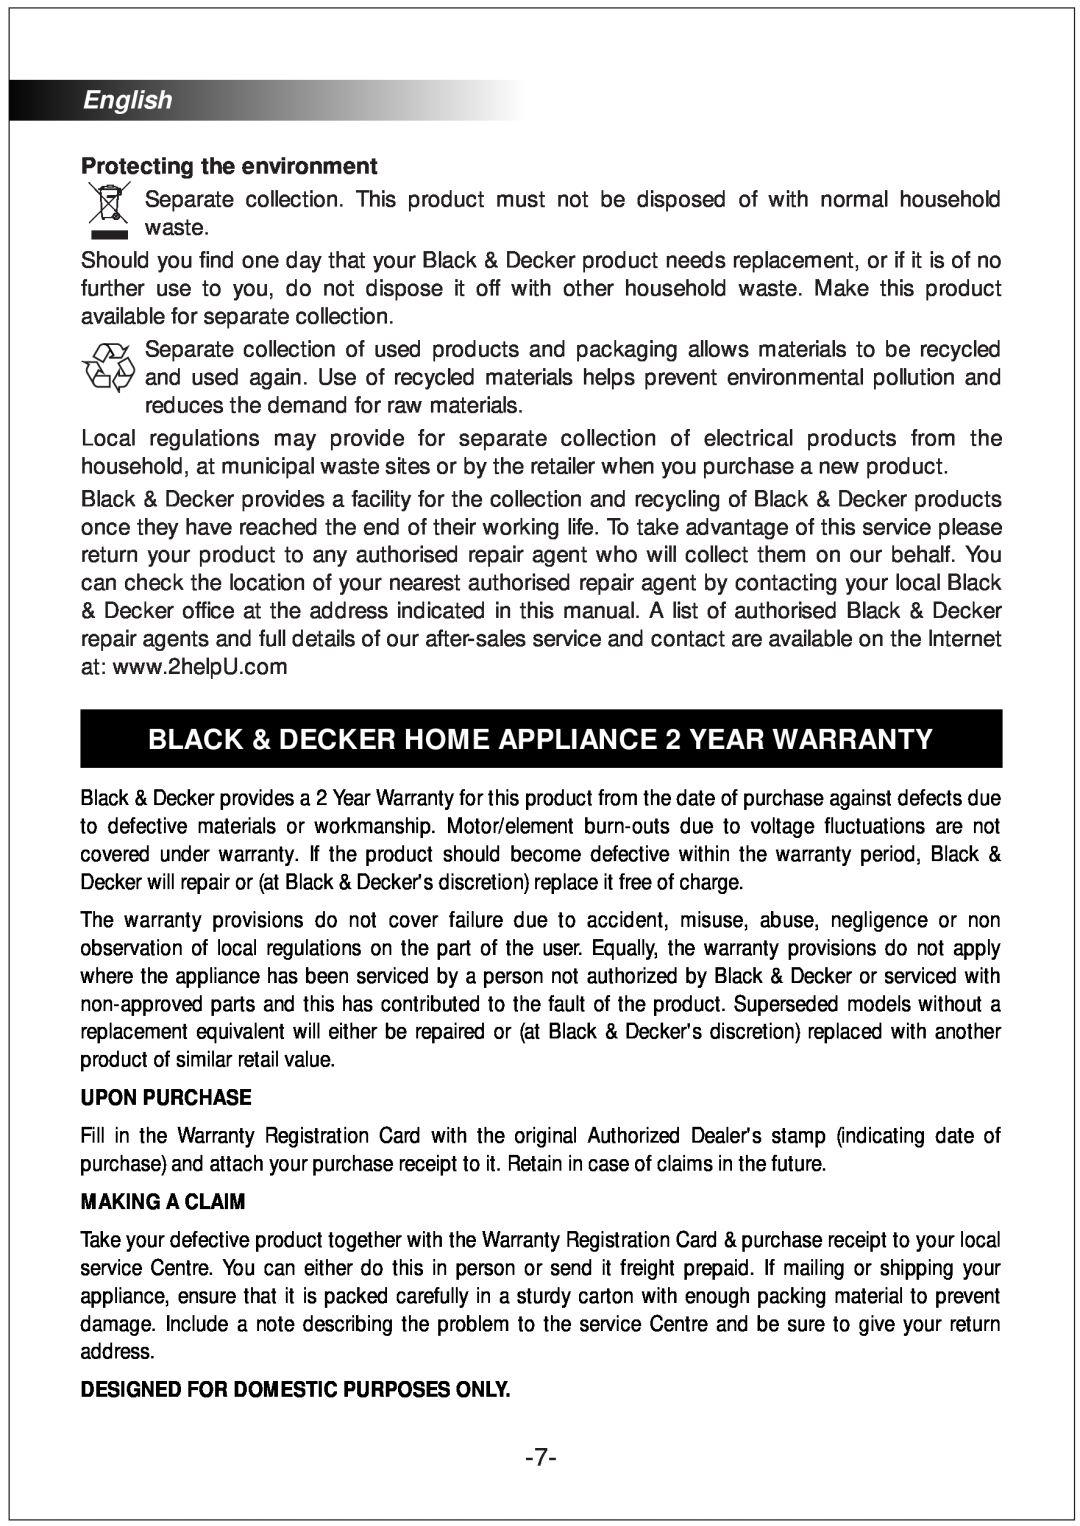 Black & Decker DCM80 manual BLACK & DECKER HOME APPLIANCE 2 YEAR WARRANTY, English, Protecting the environment 